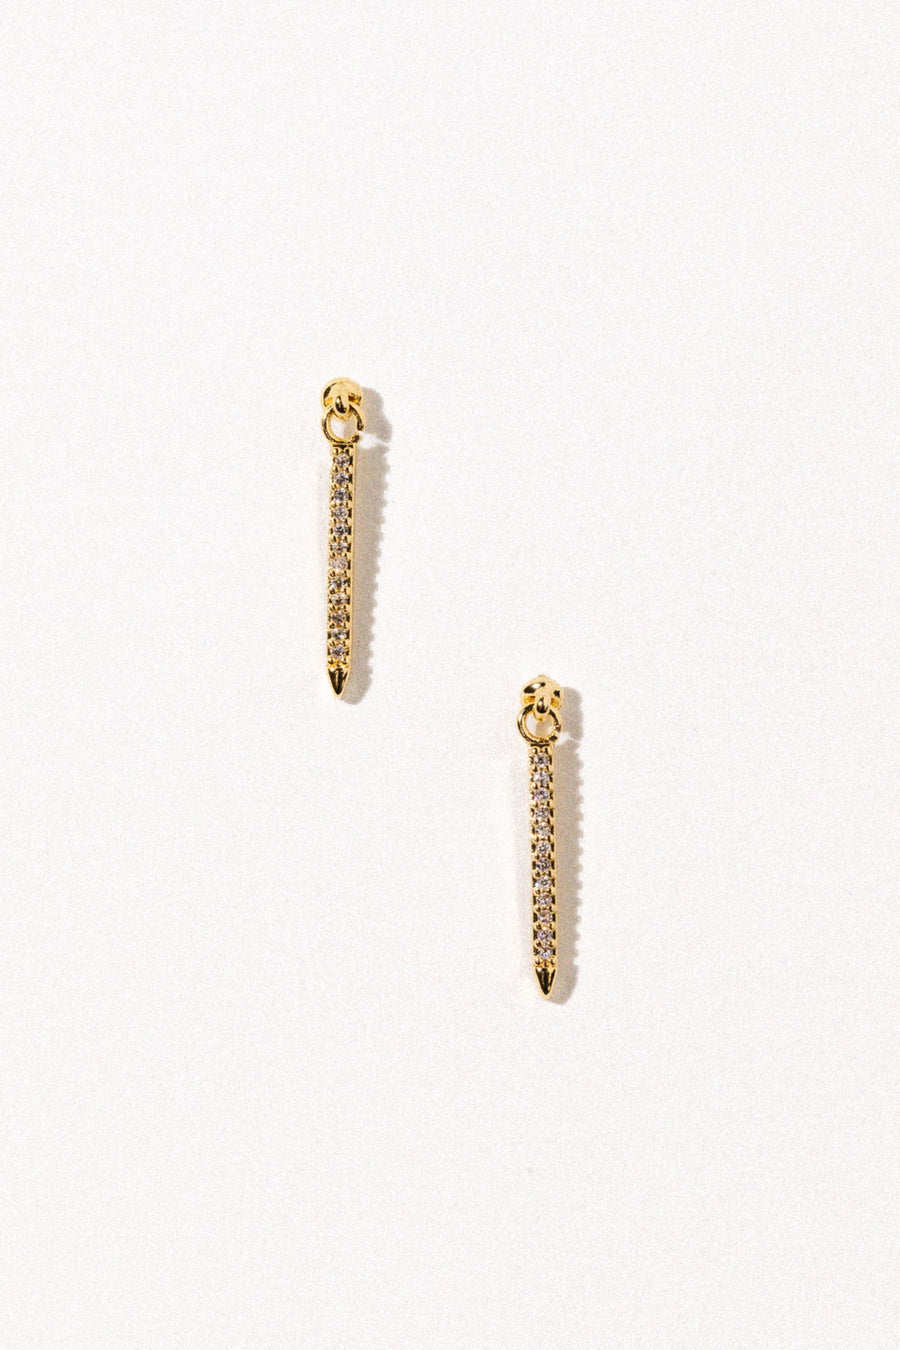 Dona Italia Jewelry Gold / Long Falling Star Stud Earrings